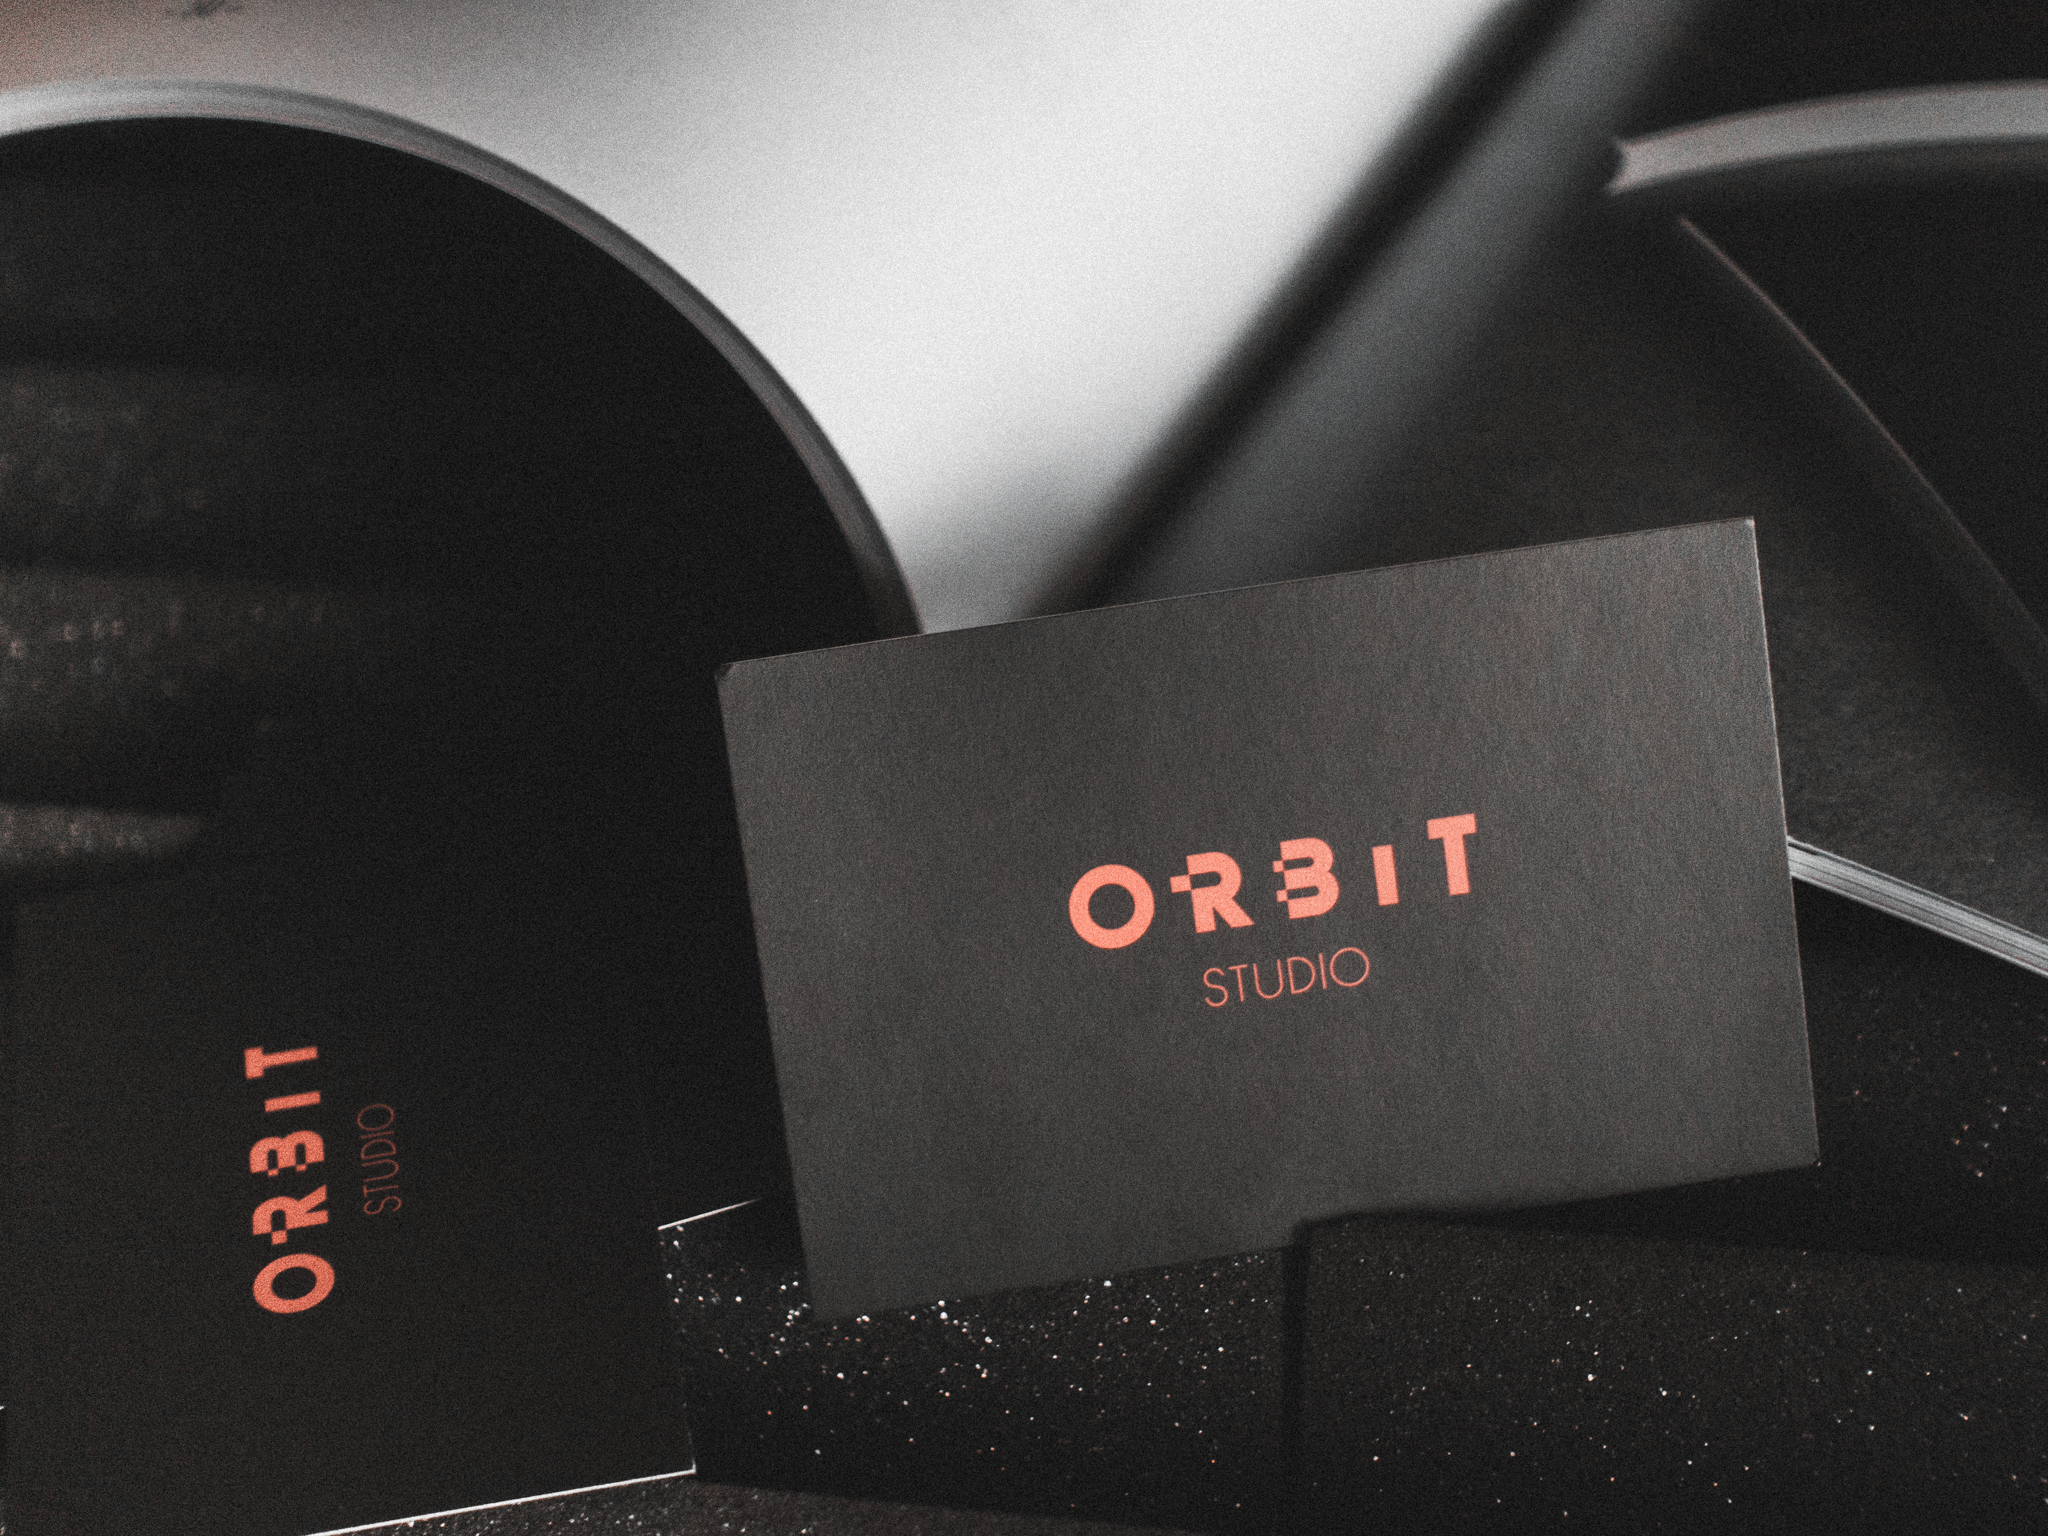 Orbit Studio